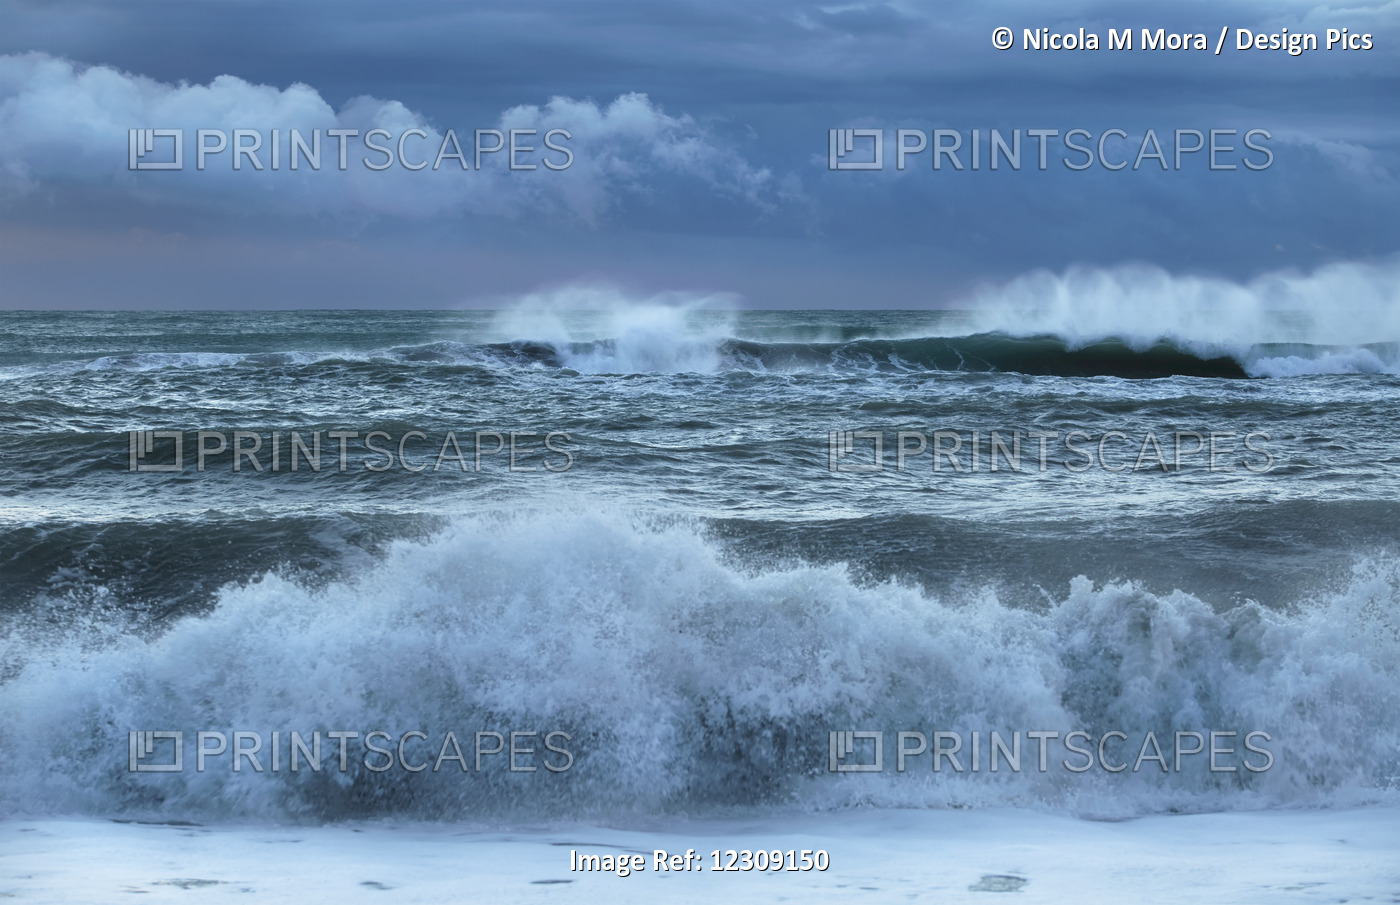 Stormy Skies Over A West Coast Beach; Greymouth, South Island, New Zealand